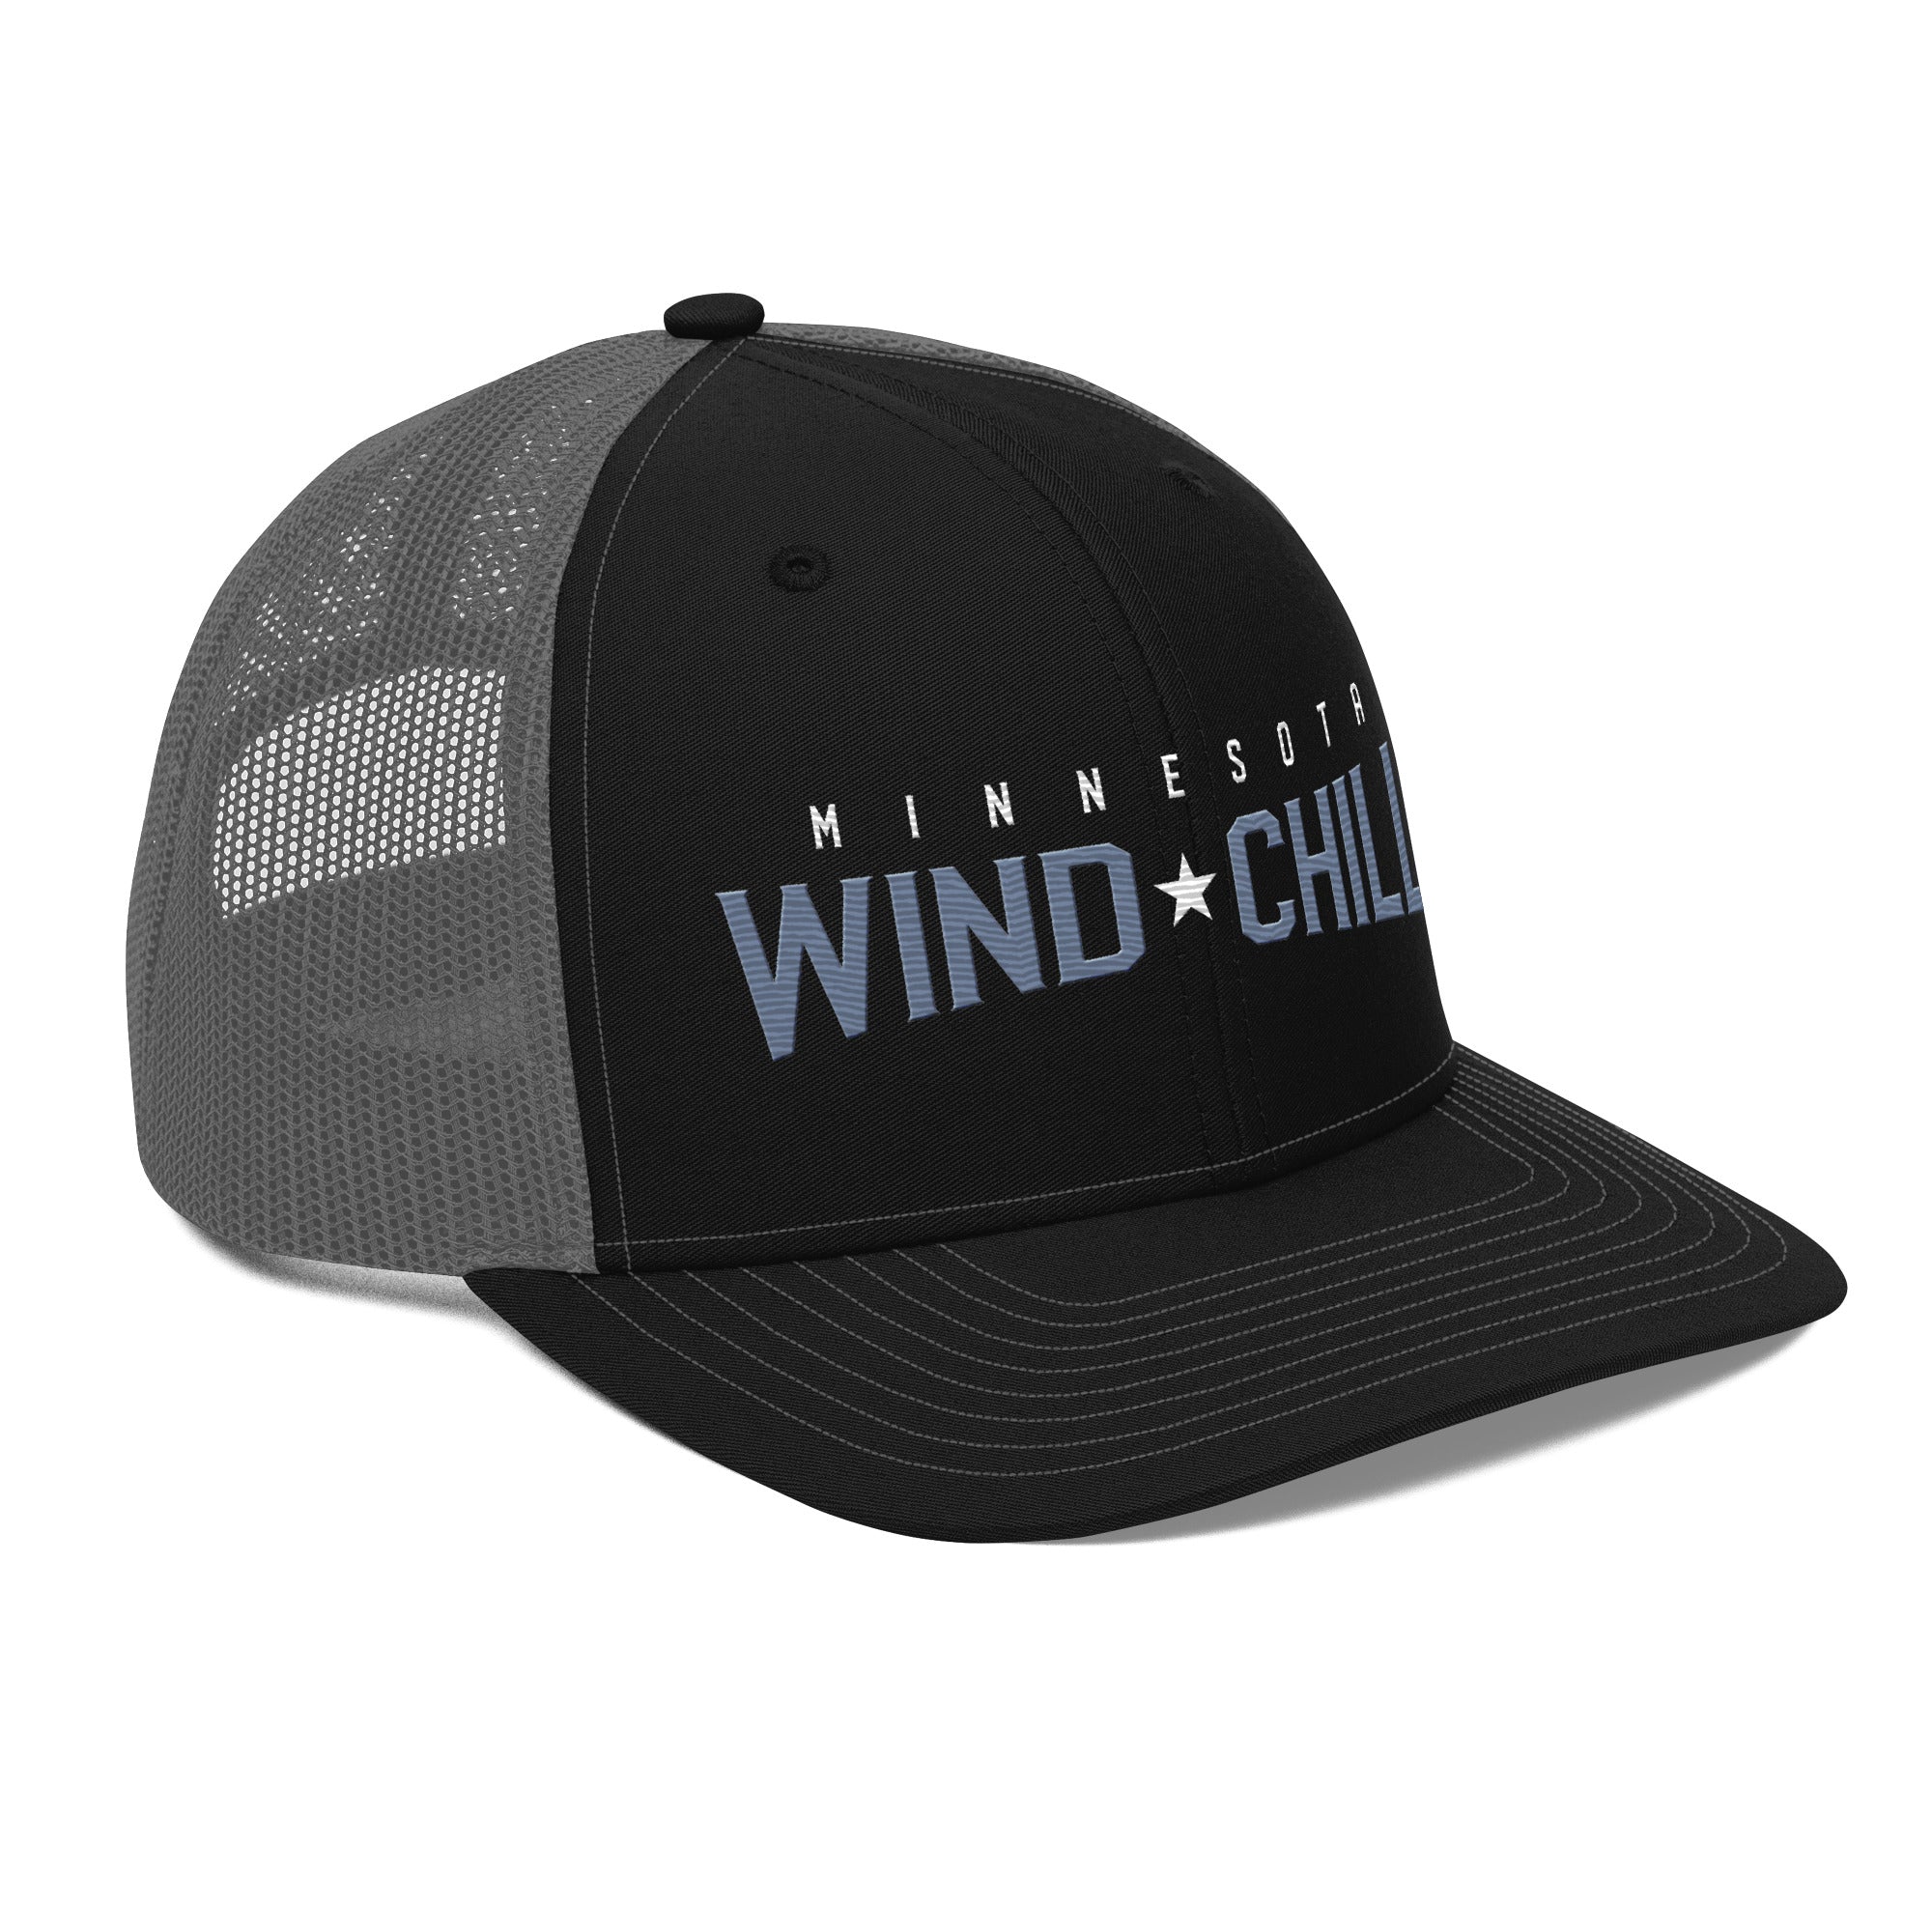 Wind Chill Wordmark Trucker Hat